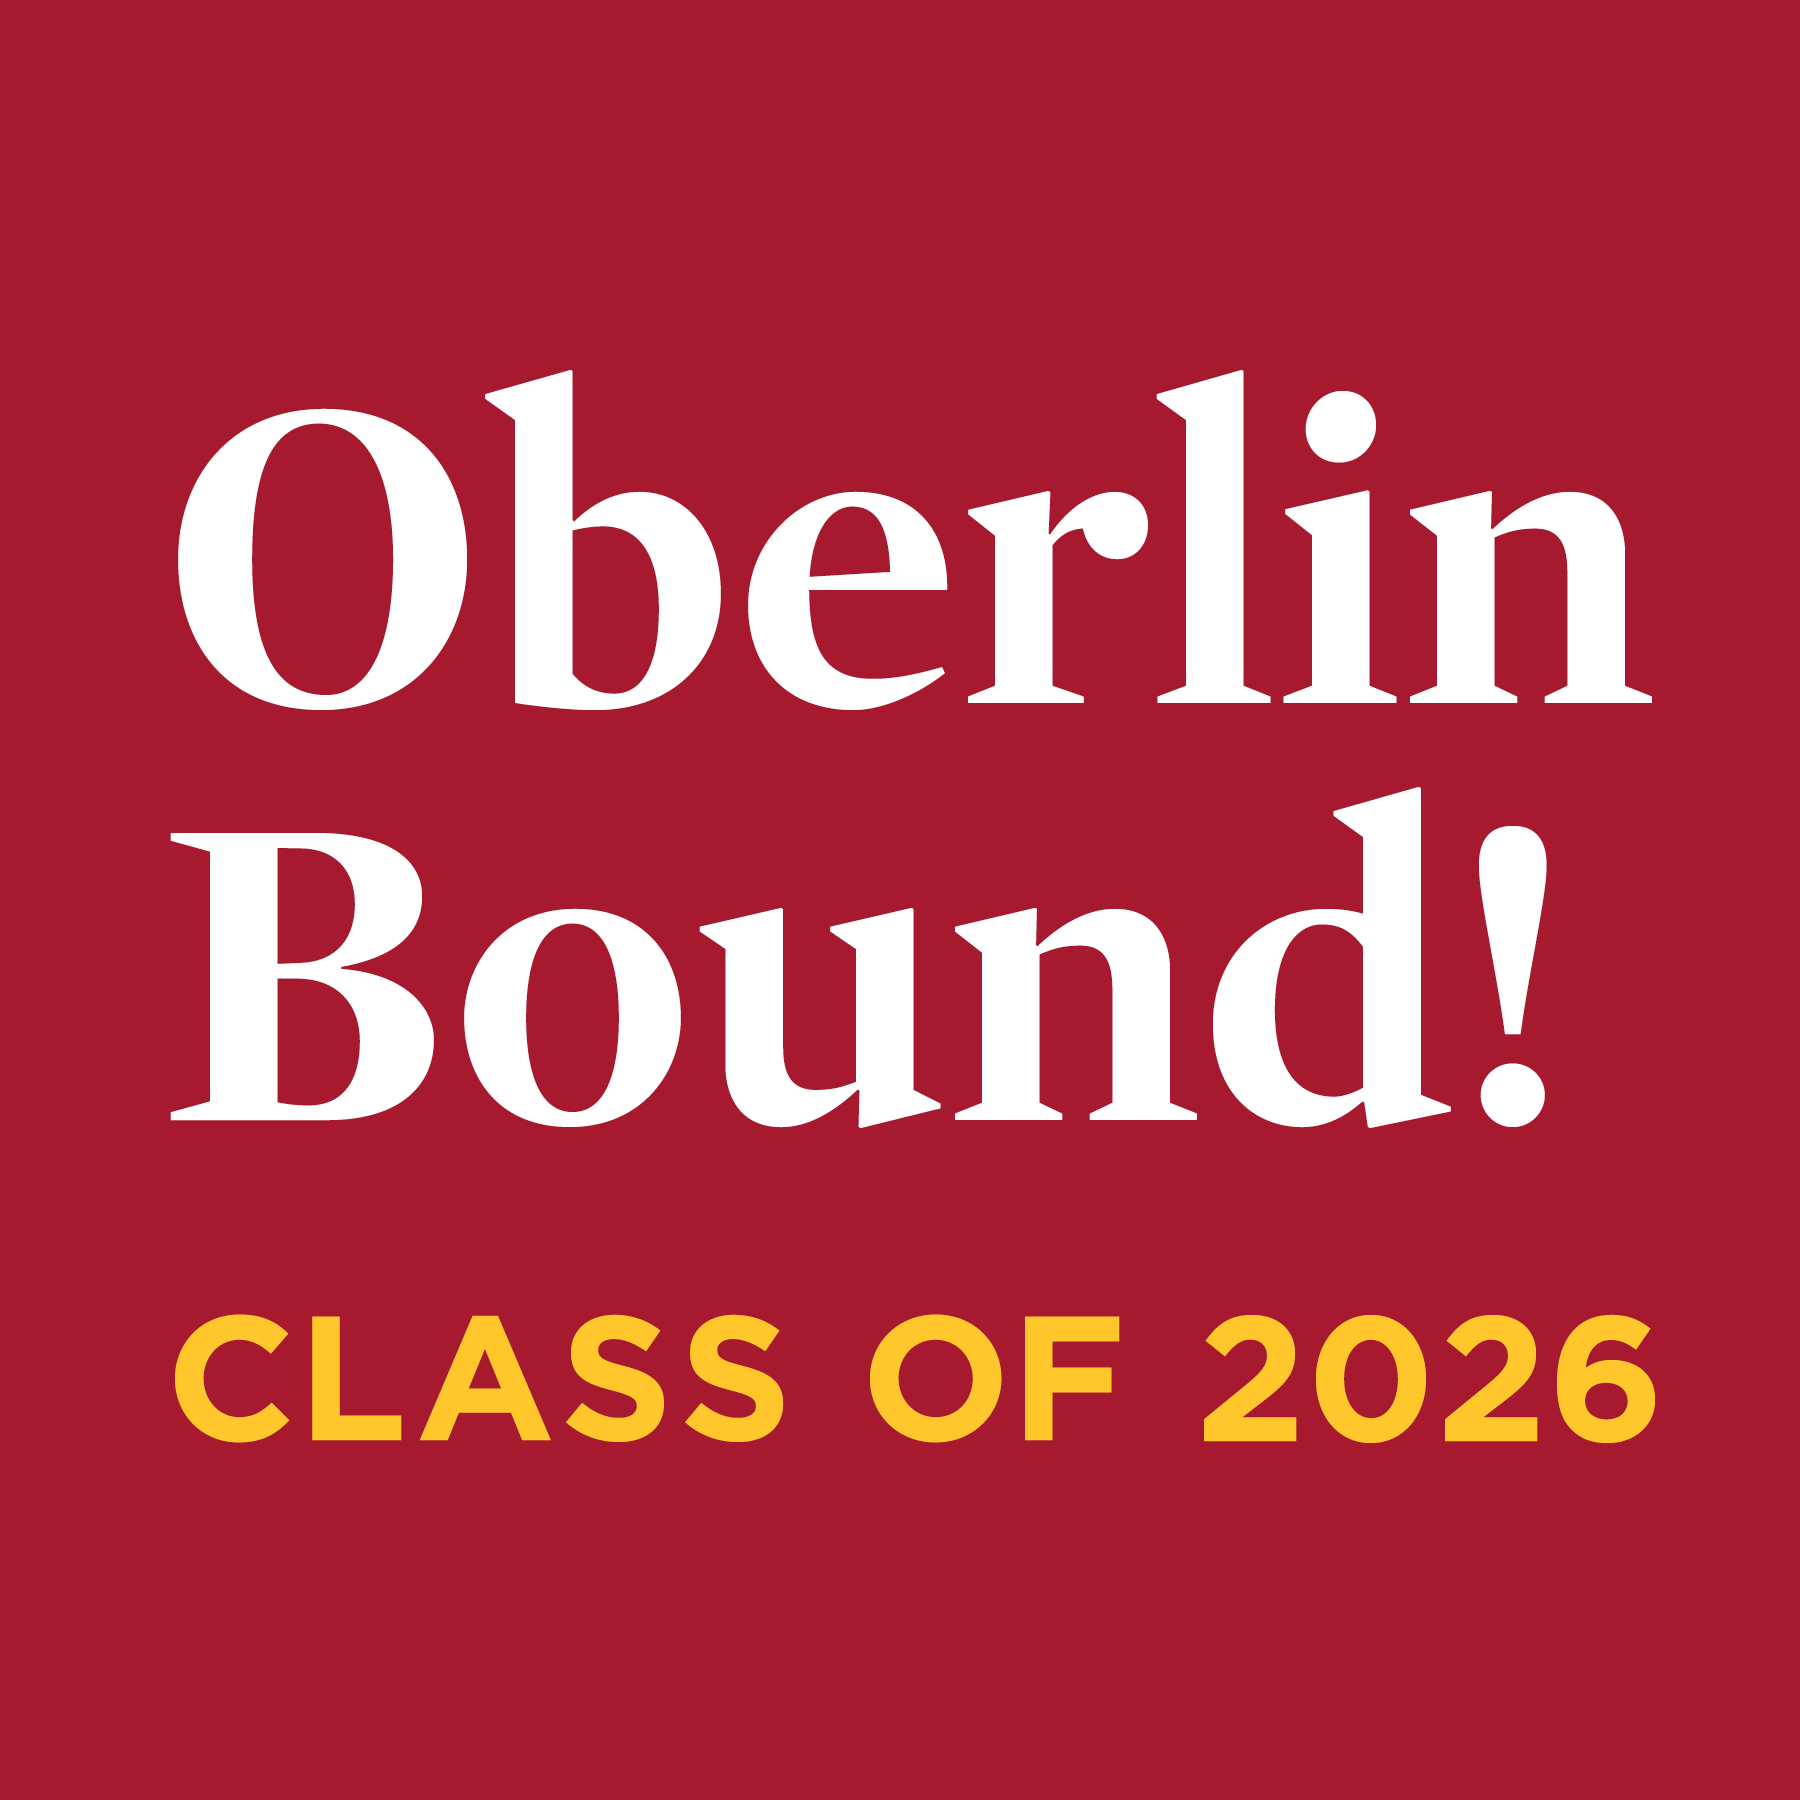 Oberlin bound class of 2026